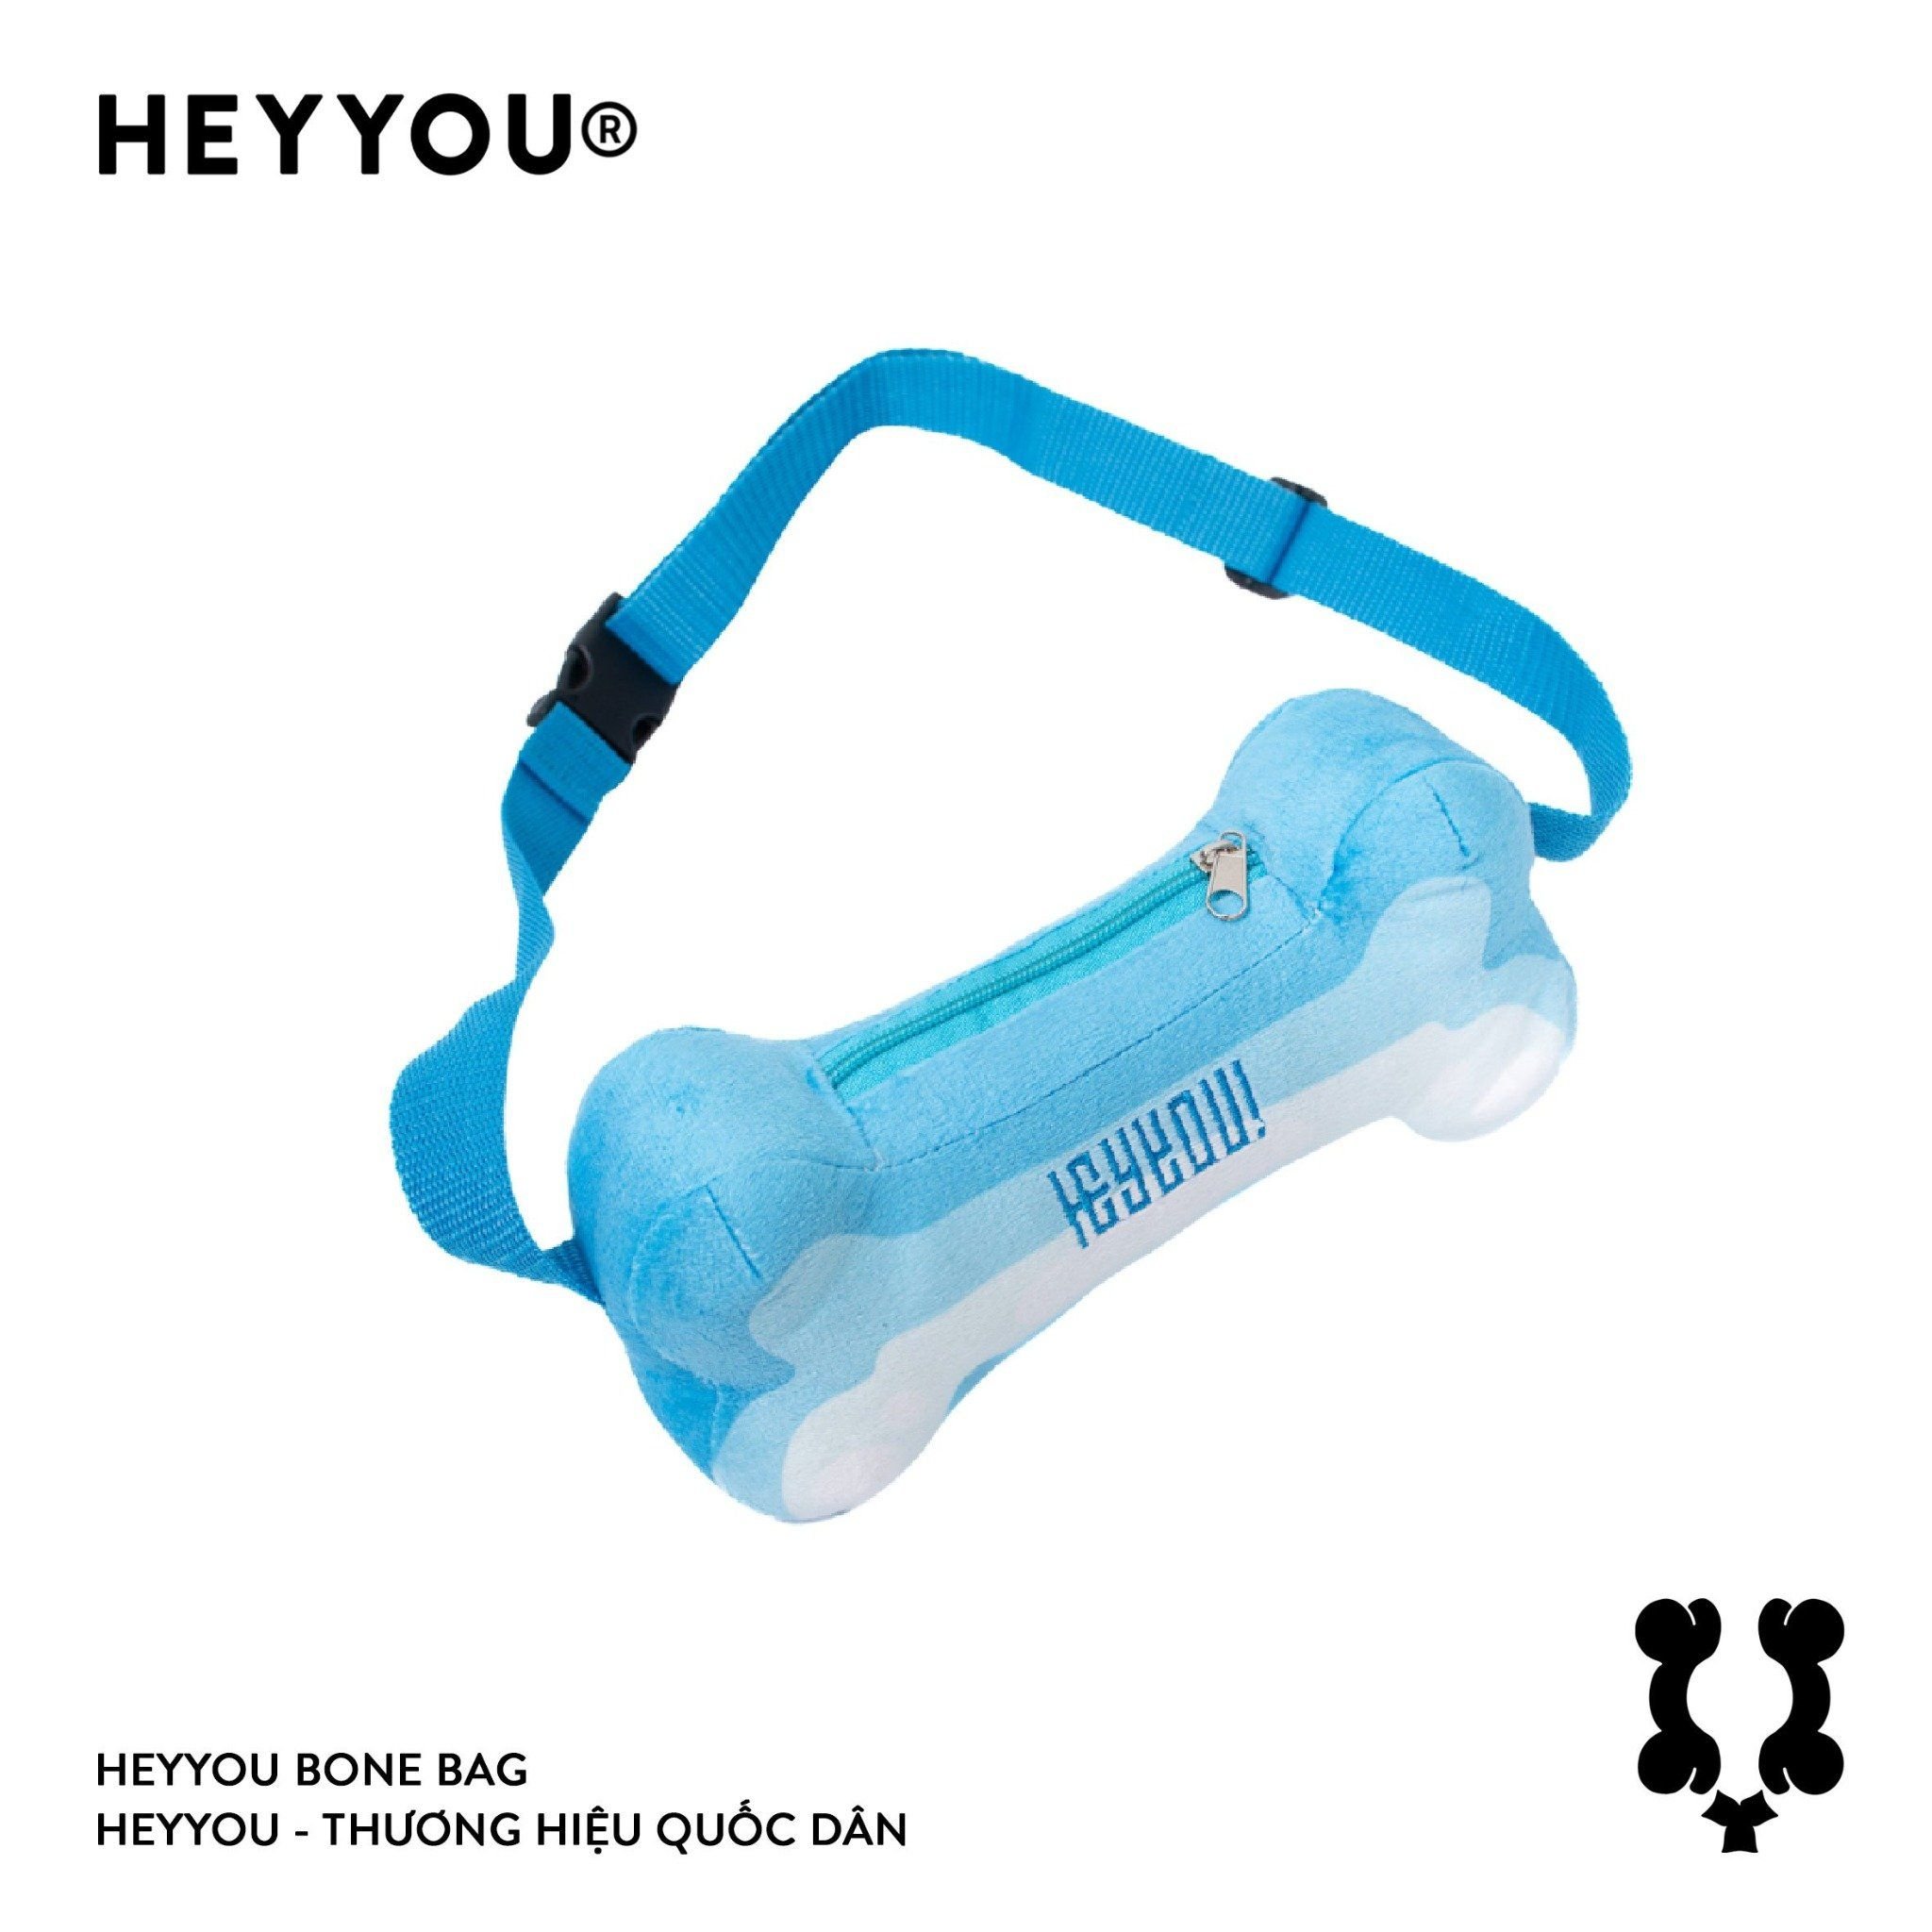  HEYYOU BONE BAG 